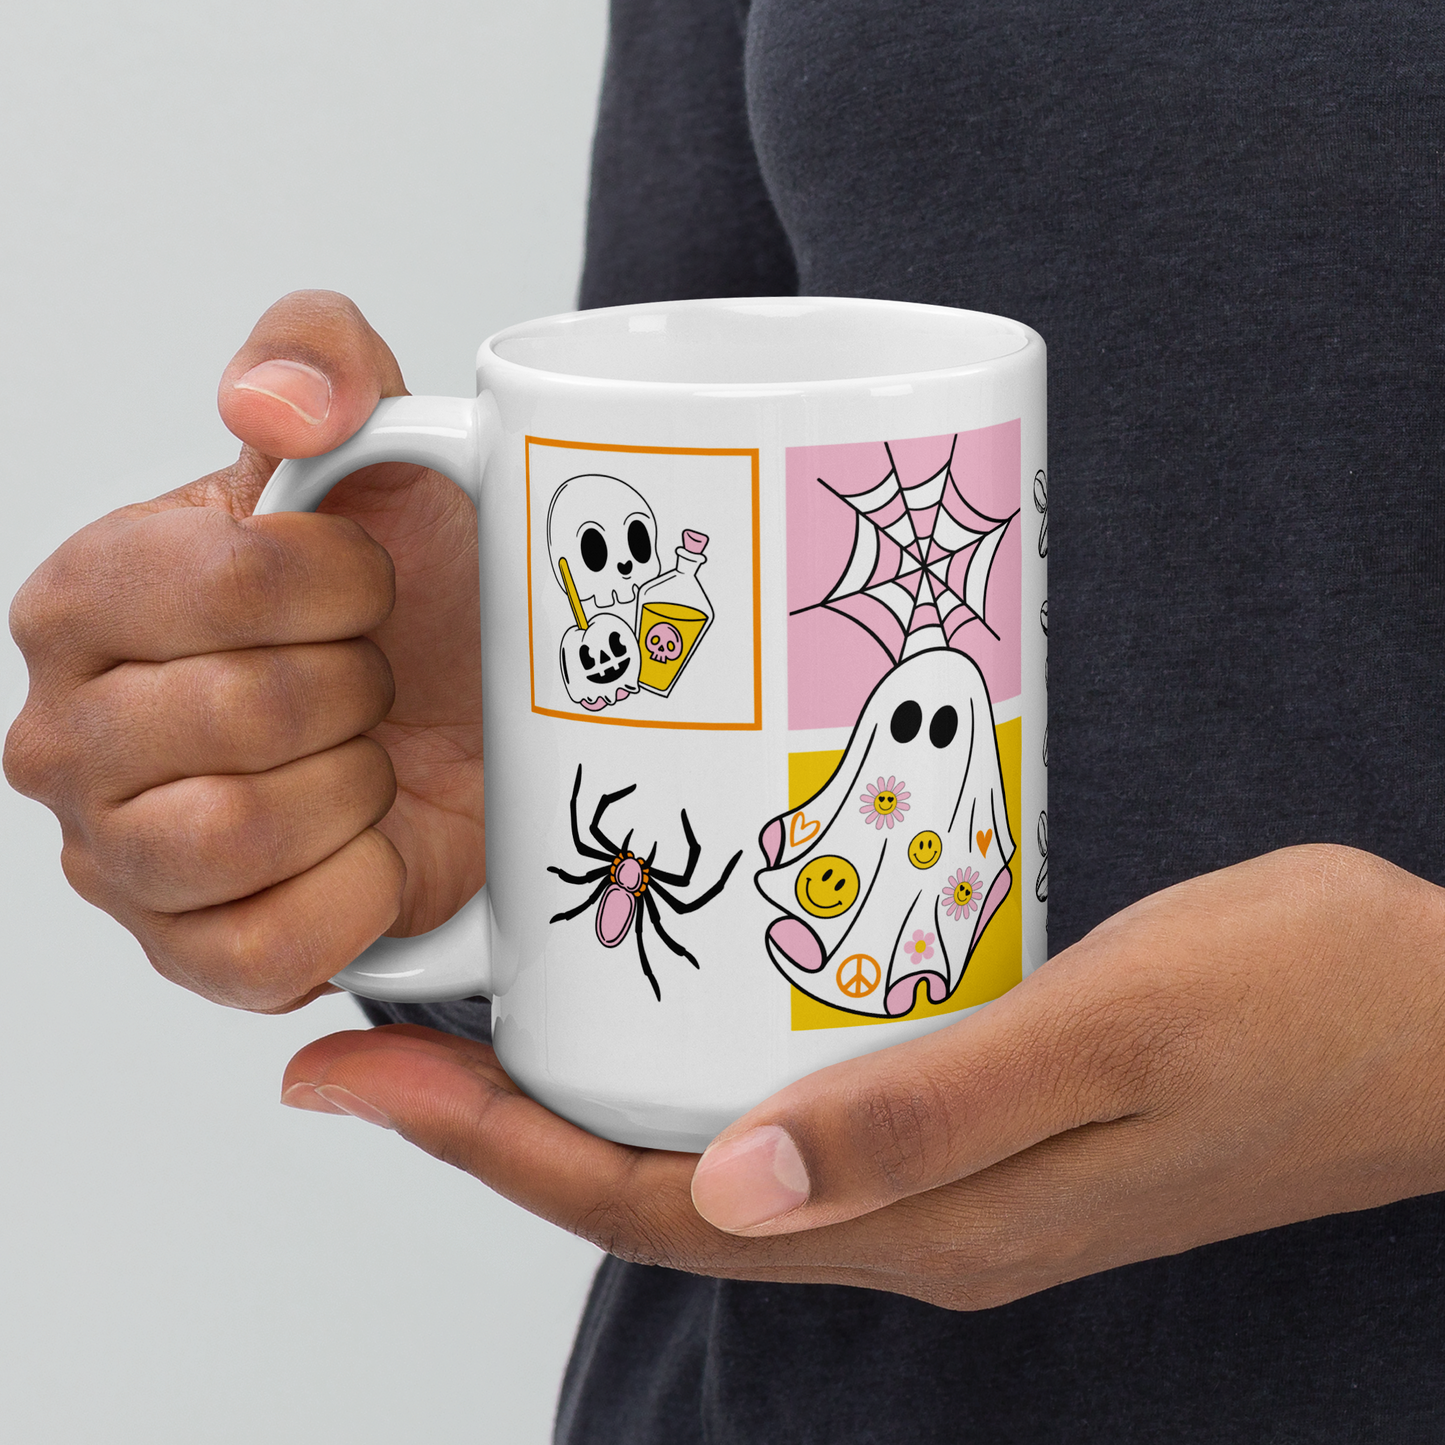 Magic Potion Halloween Coffee Mug | White | 11oz or 15oz